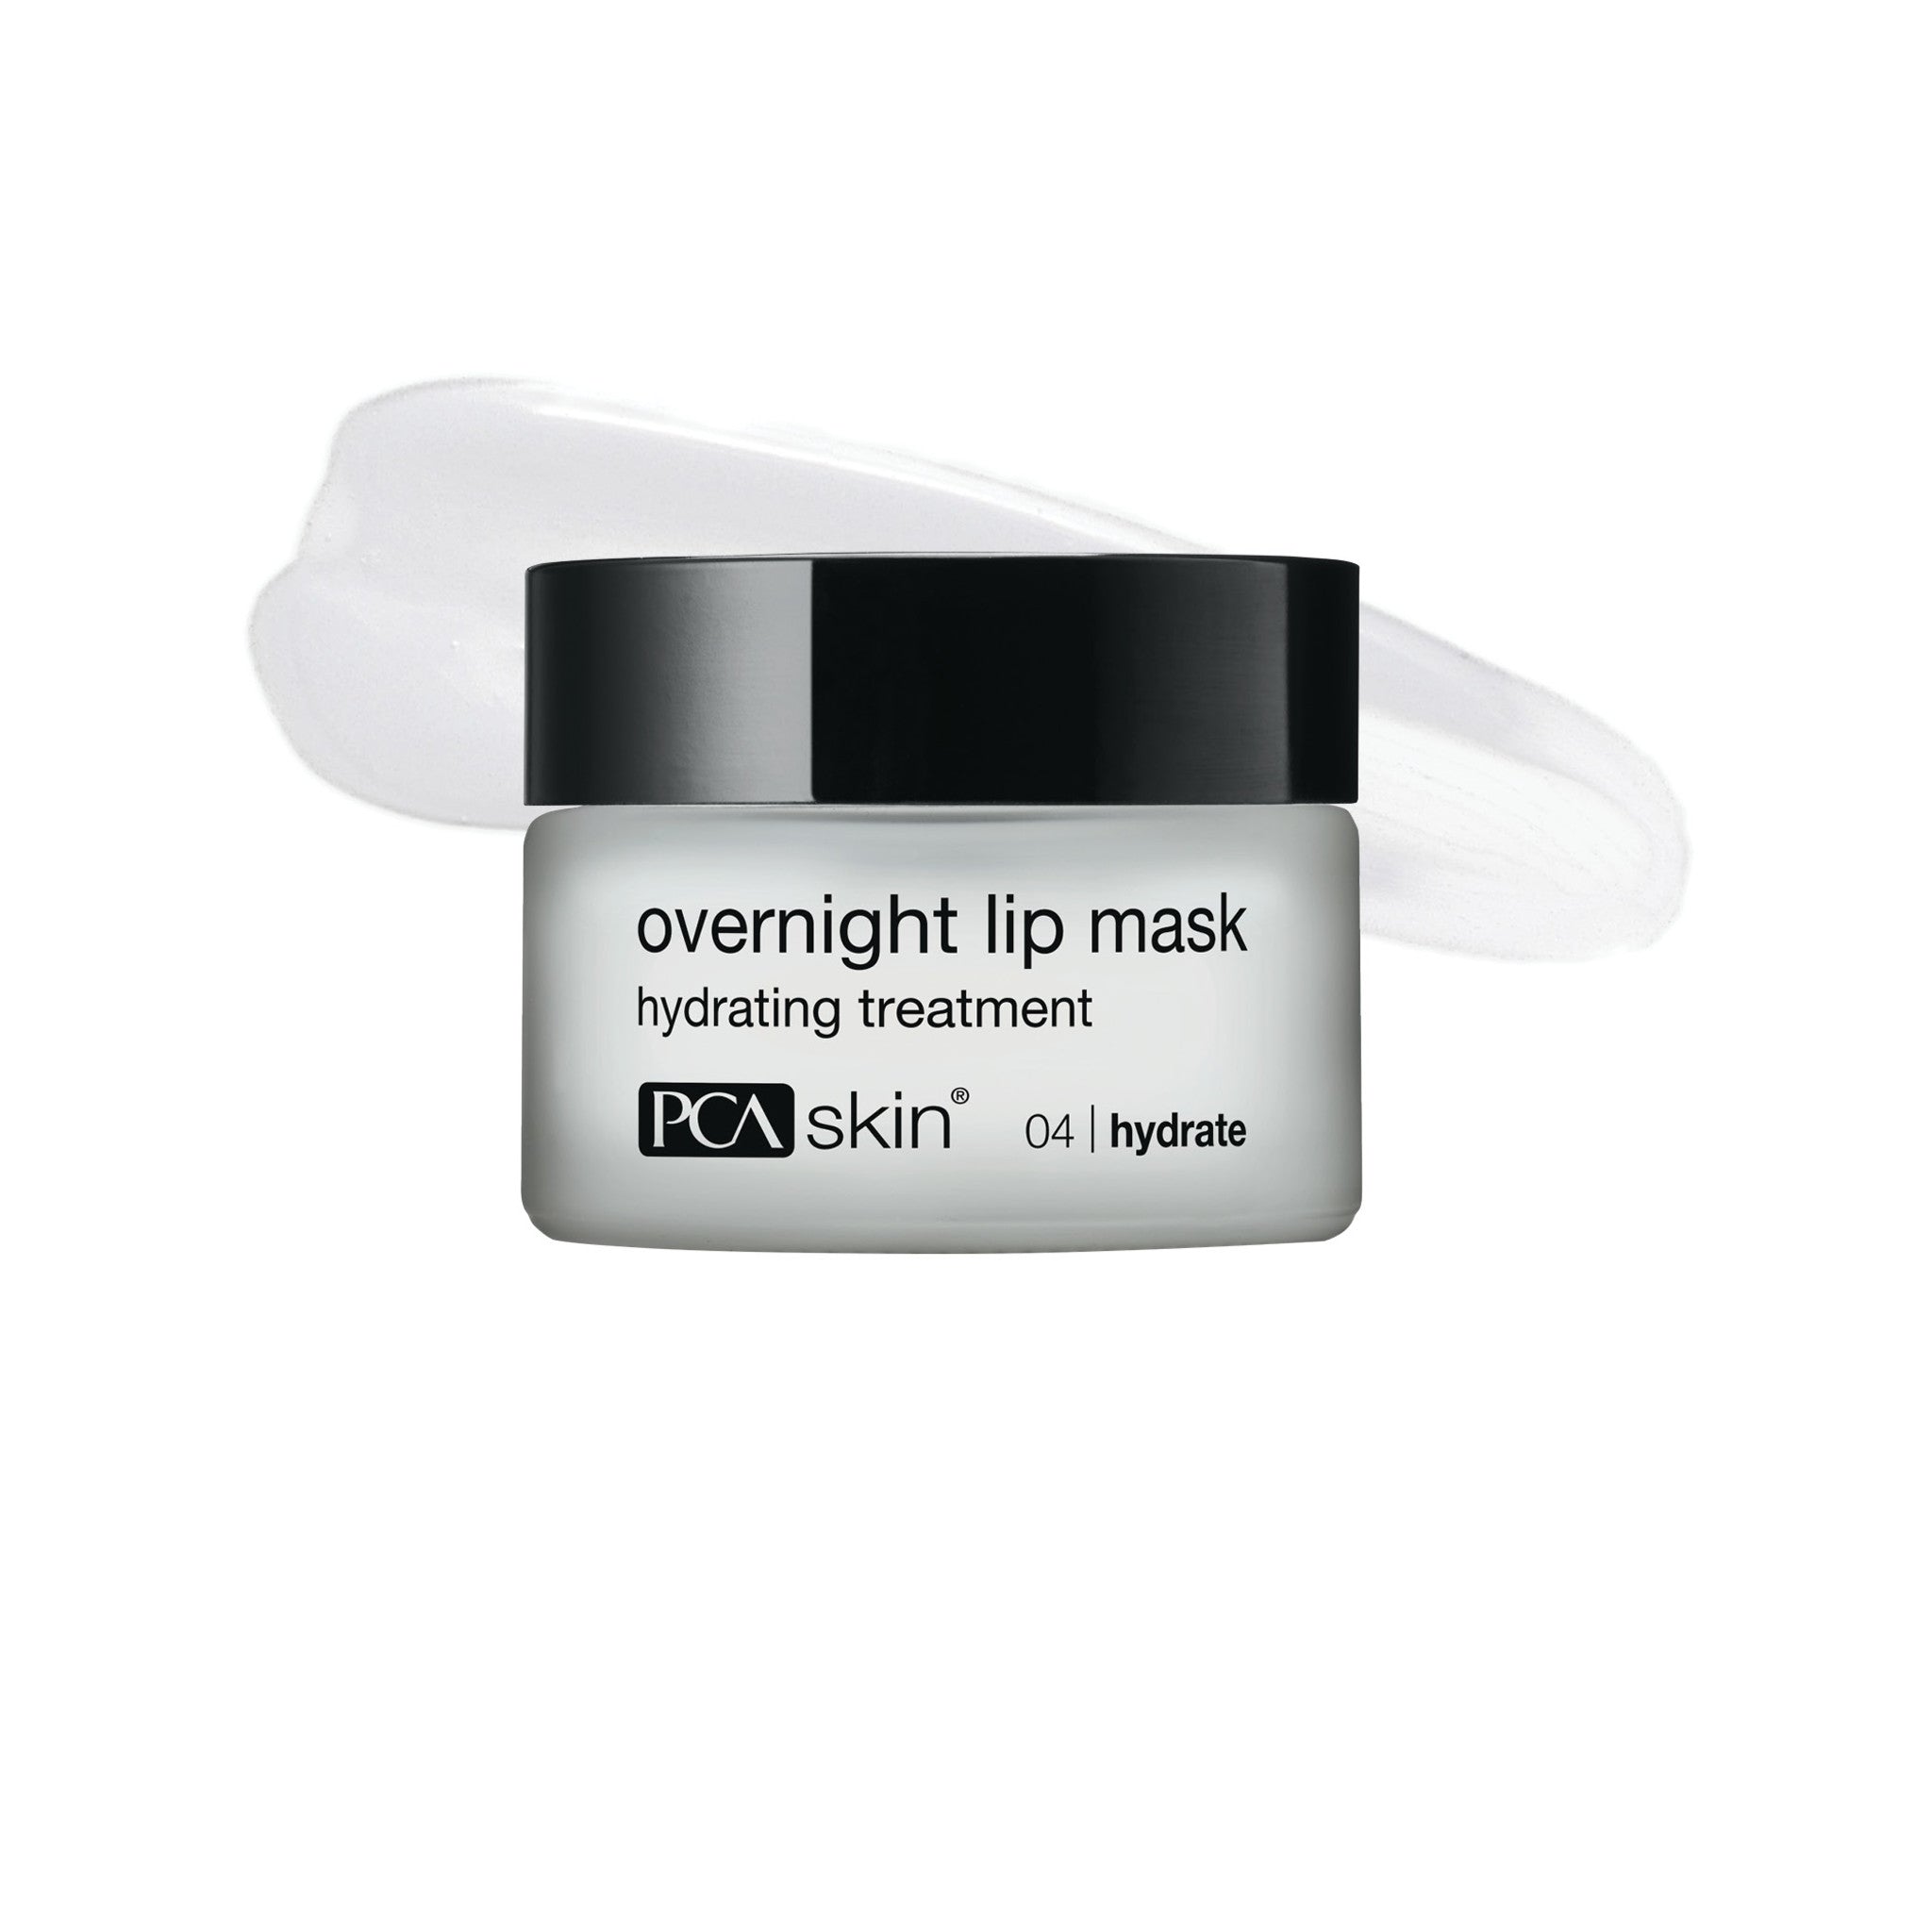 PCA Skin Overnight Lip Mask main image.